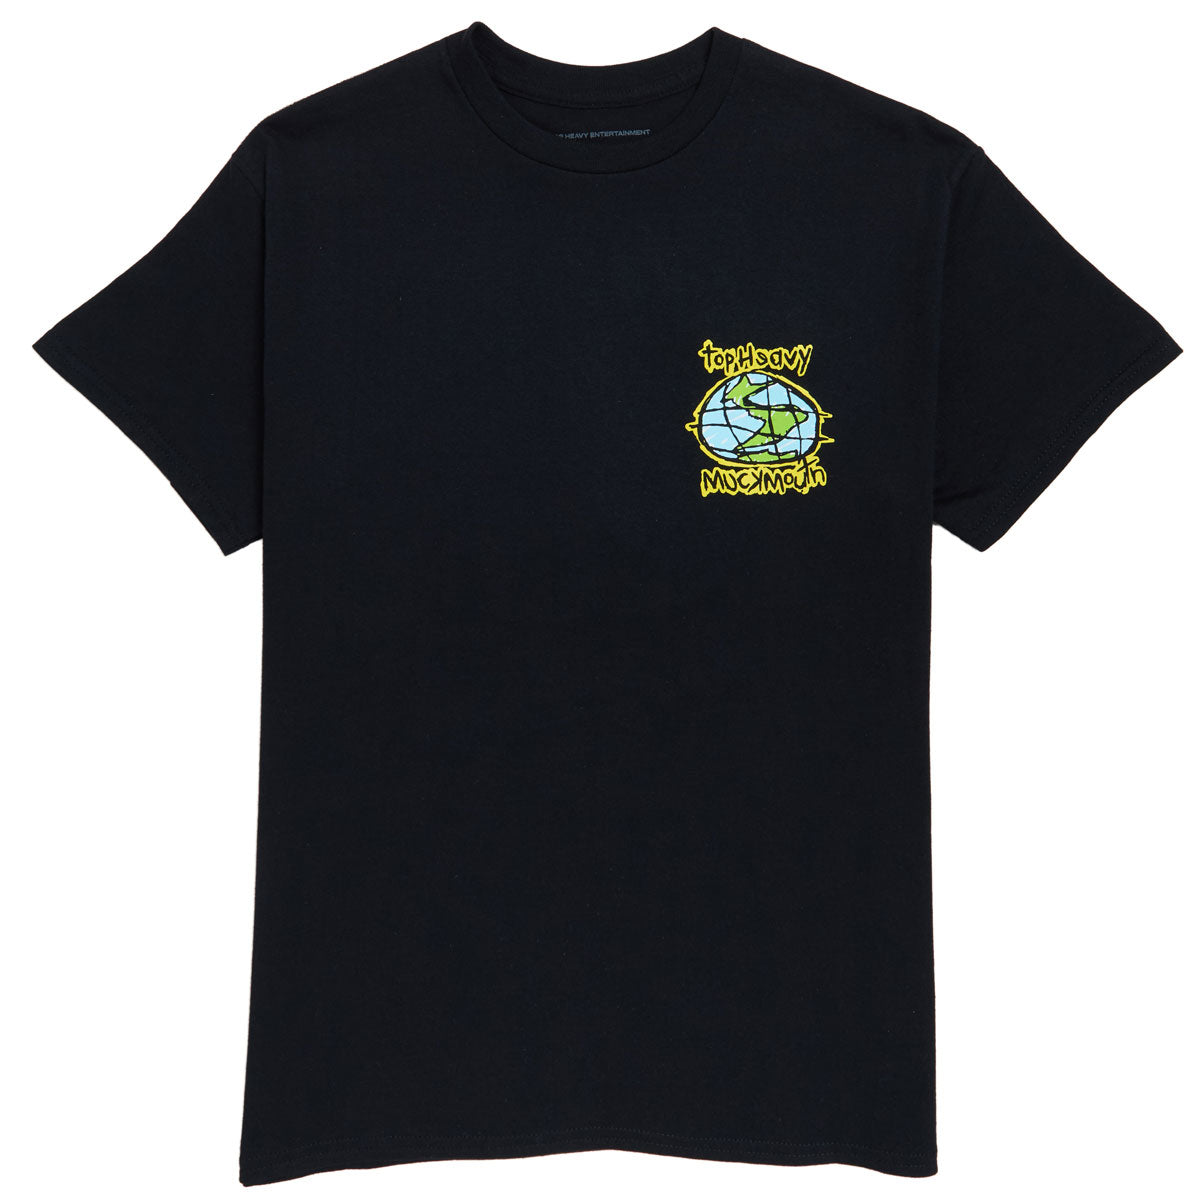 Top Heavy x Muckmouth T-Shirt - Black image 2